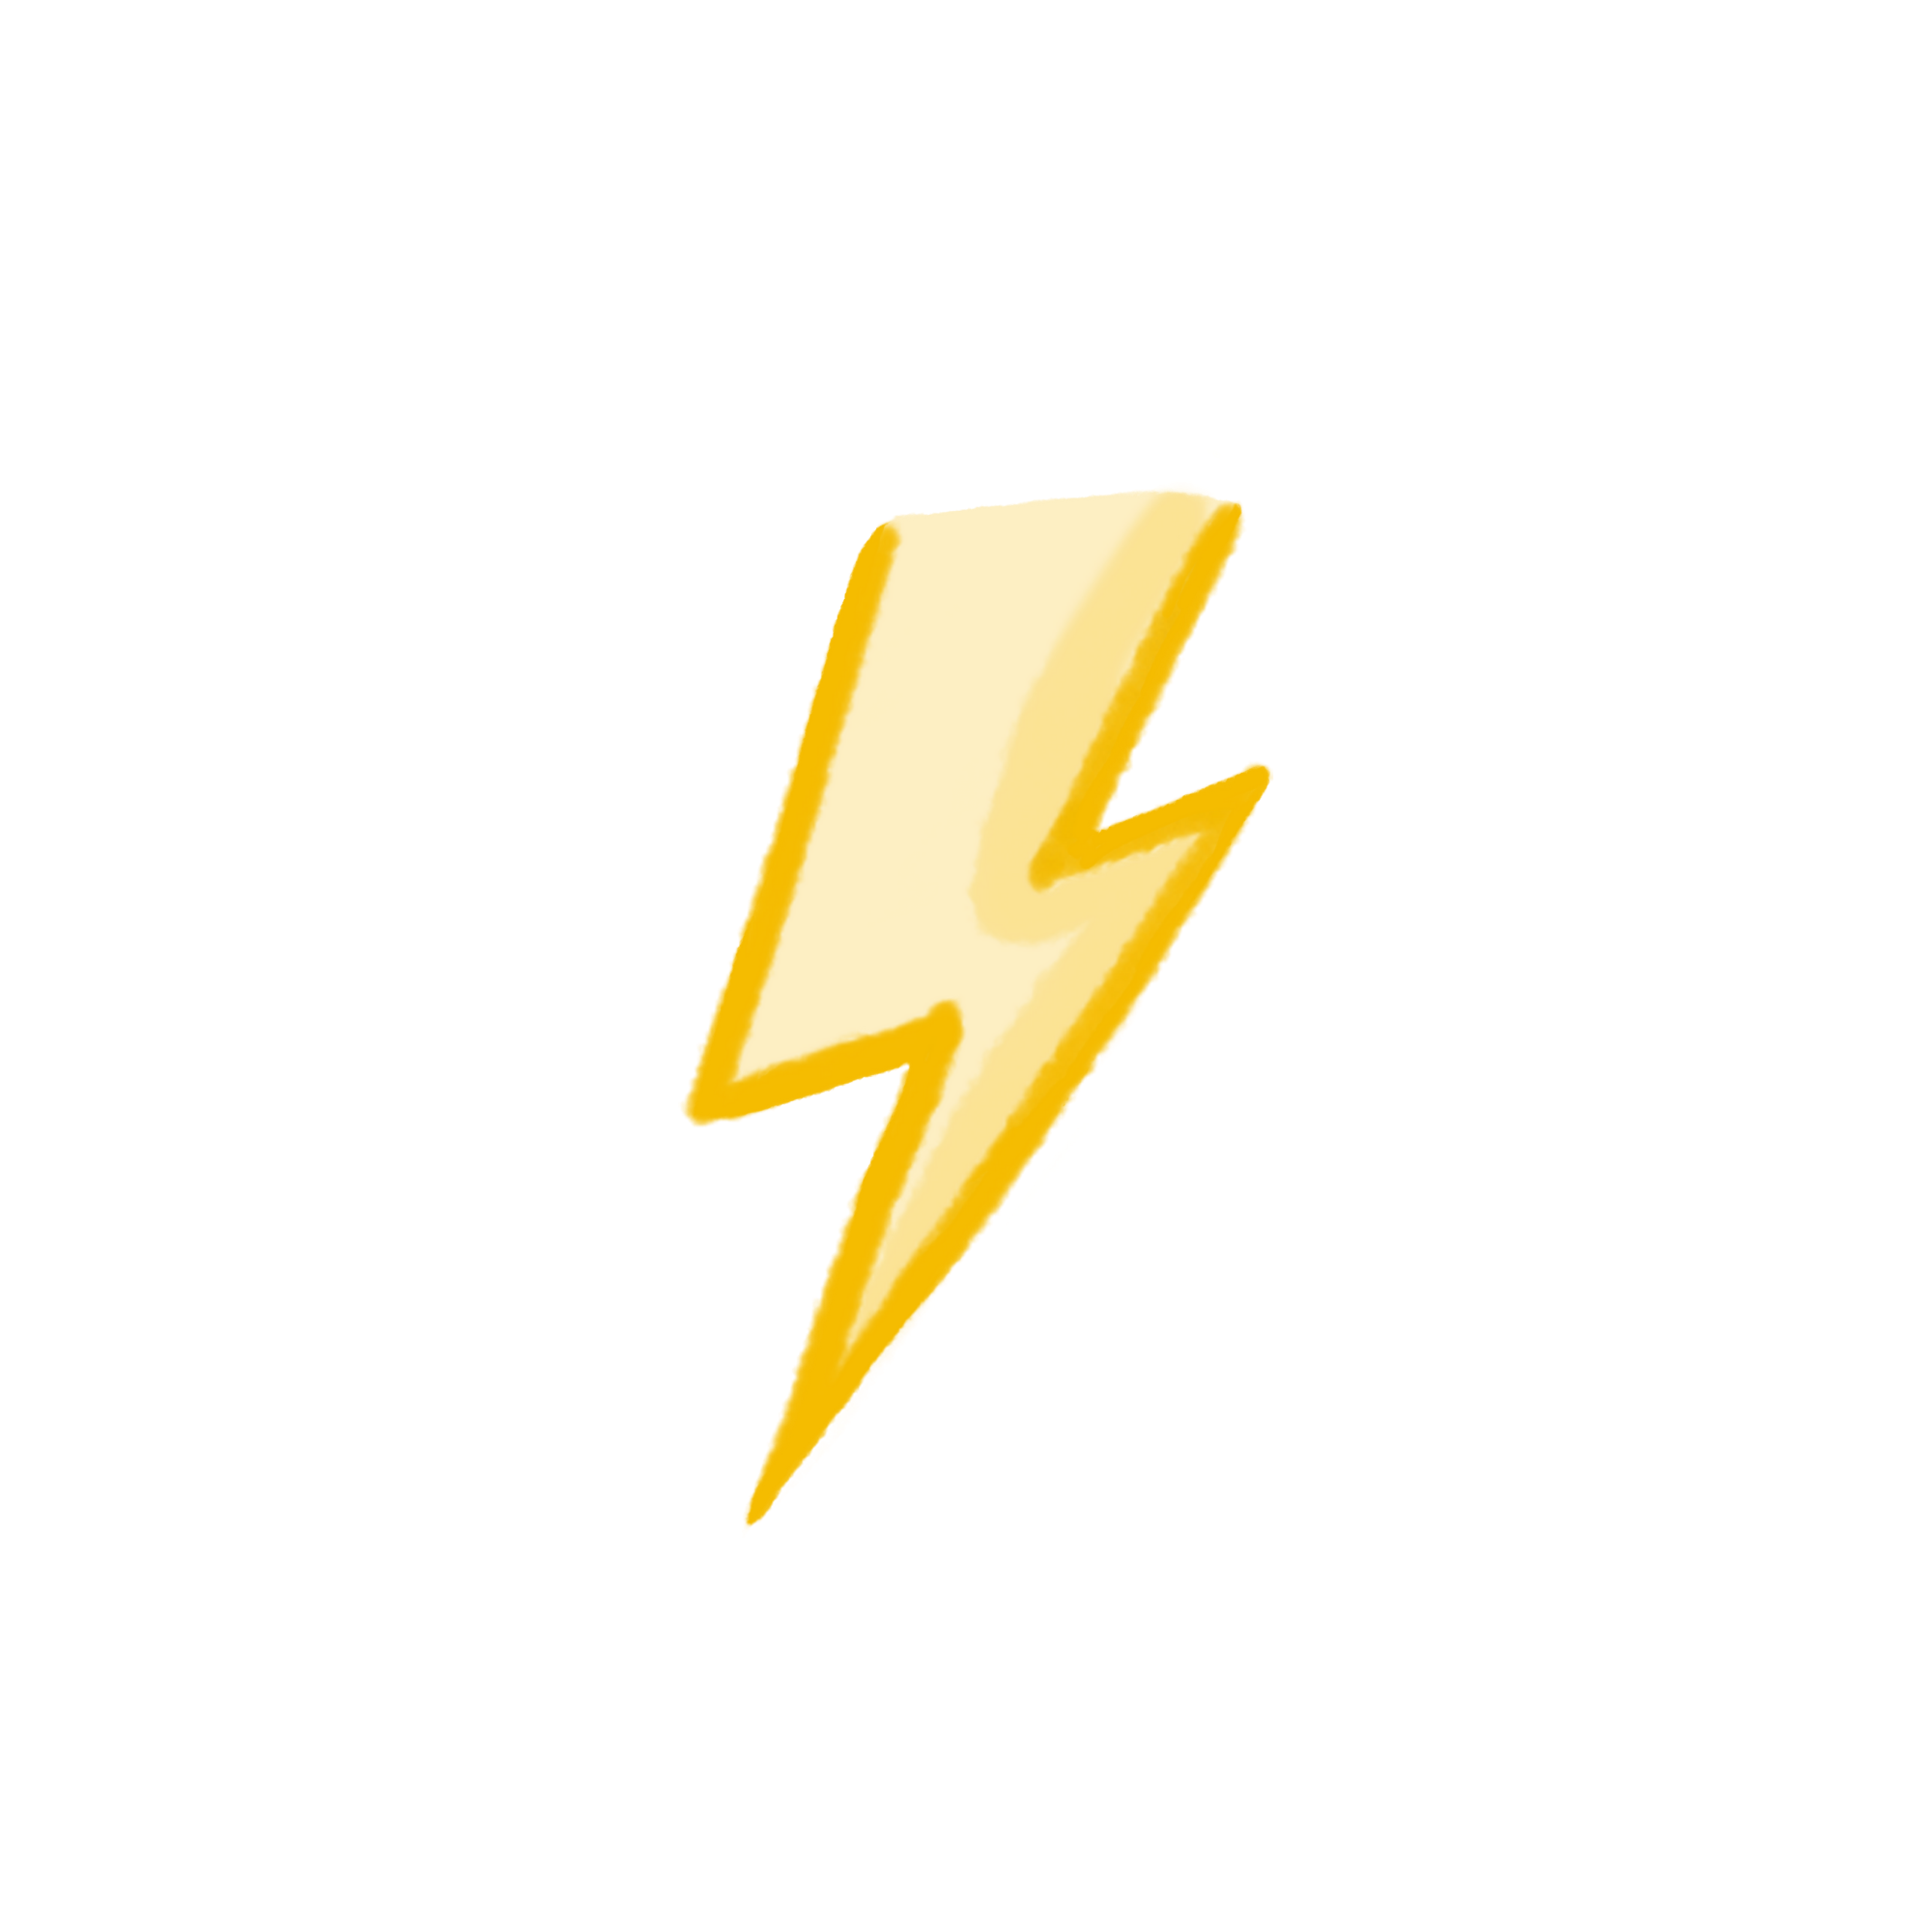 Lightening bolt image icon